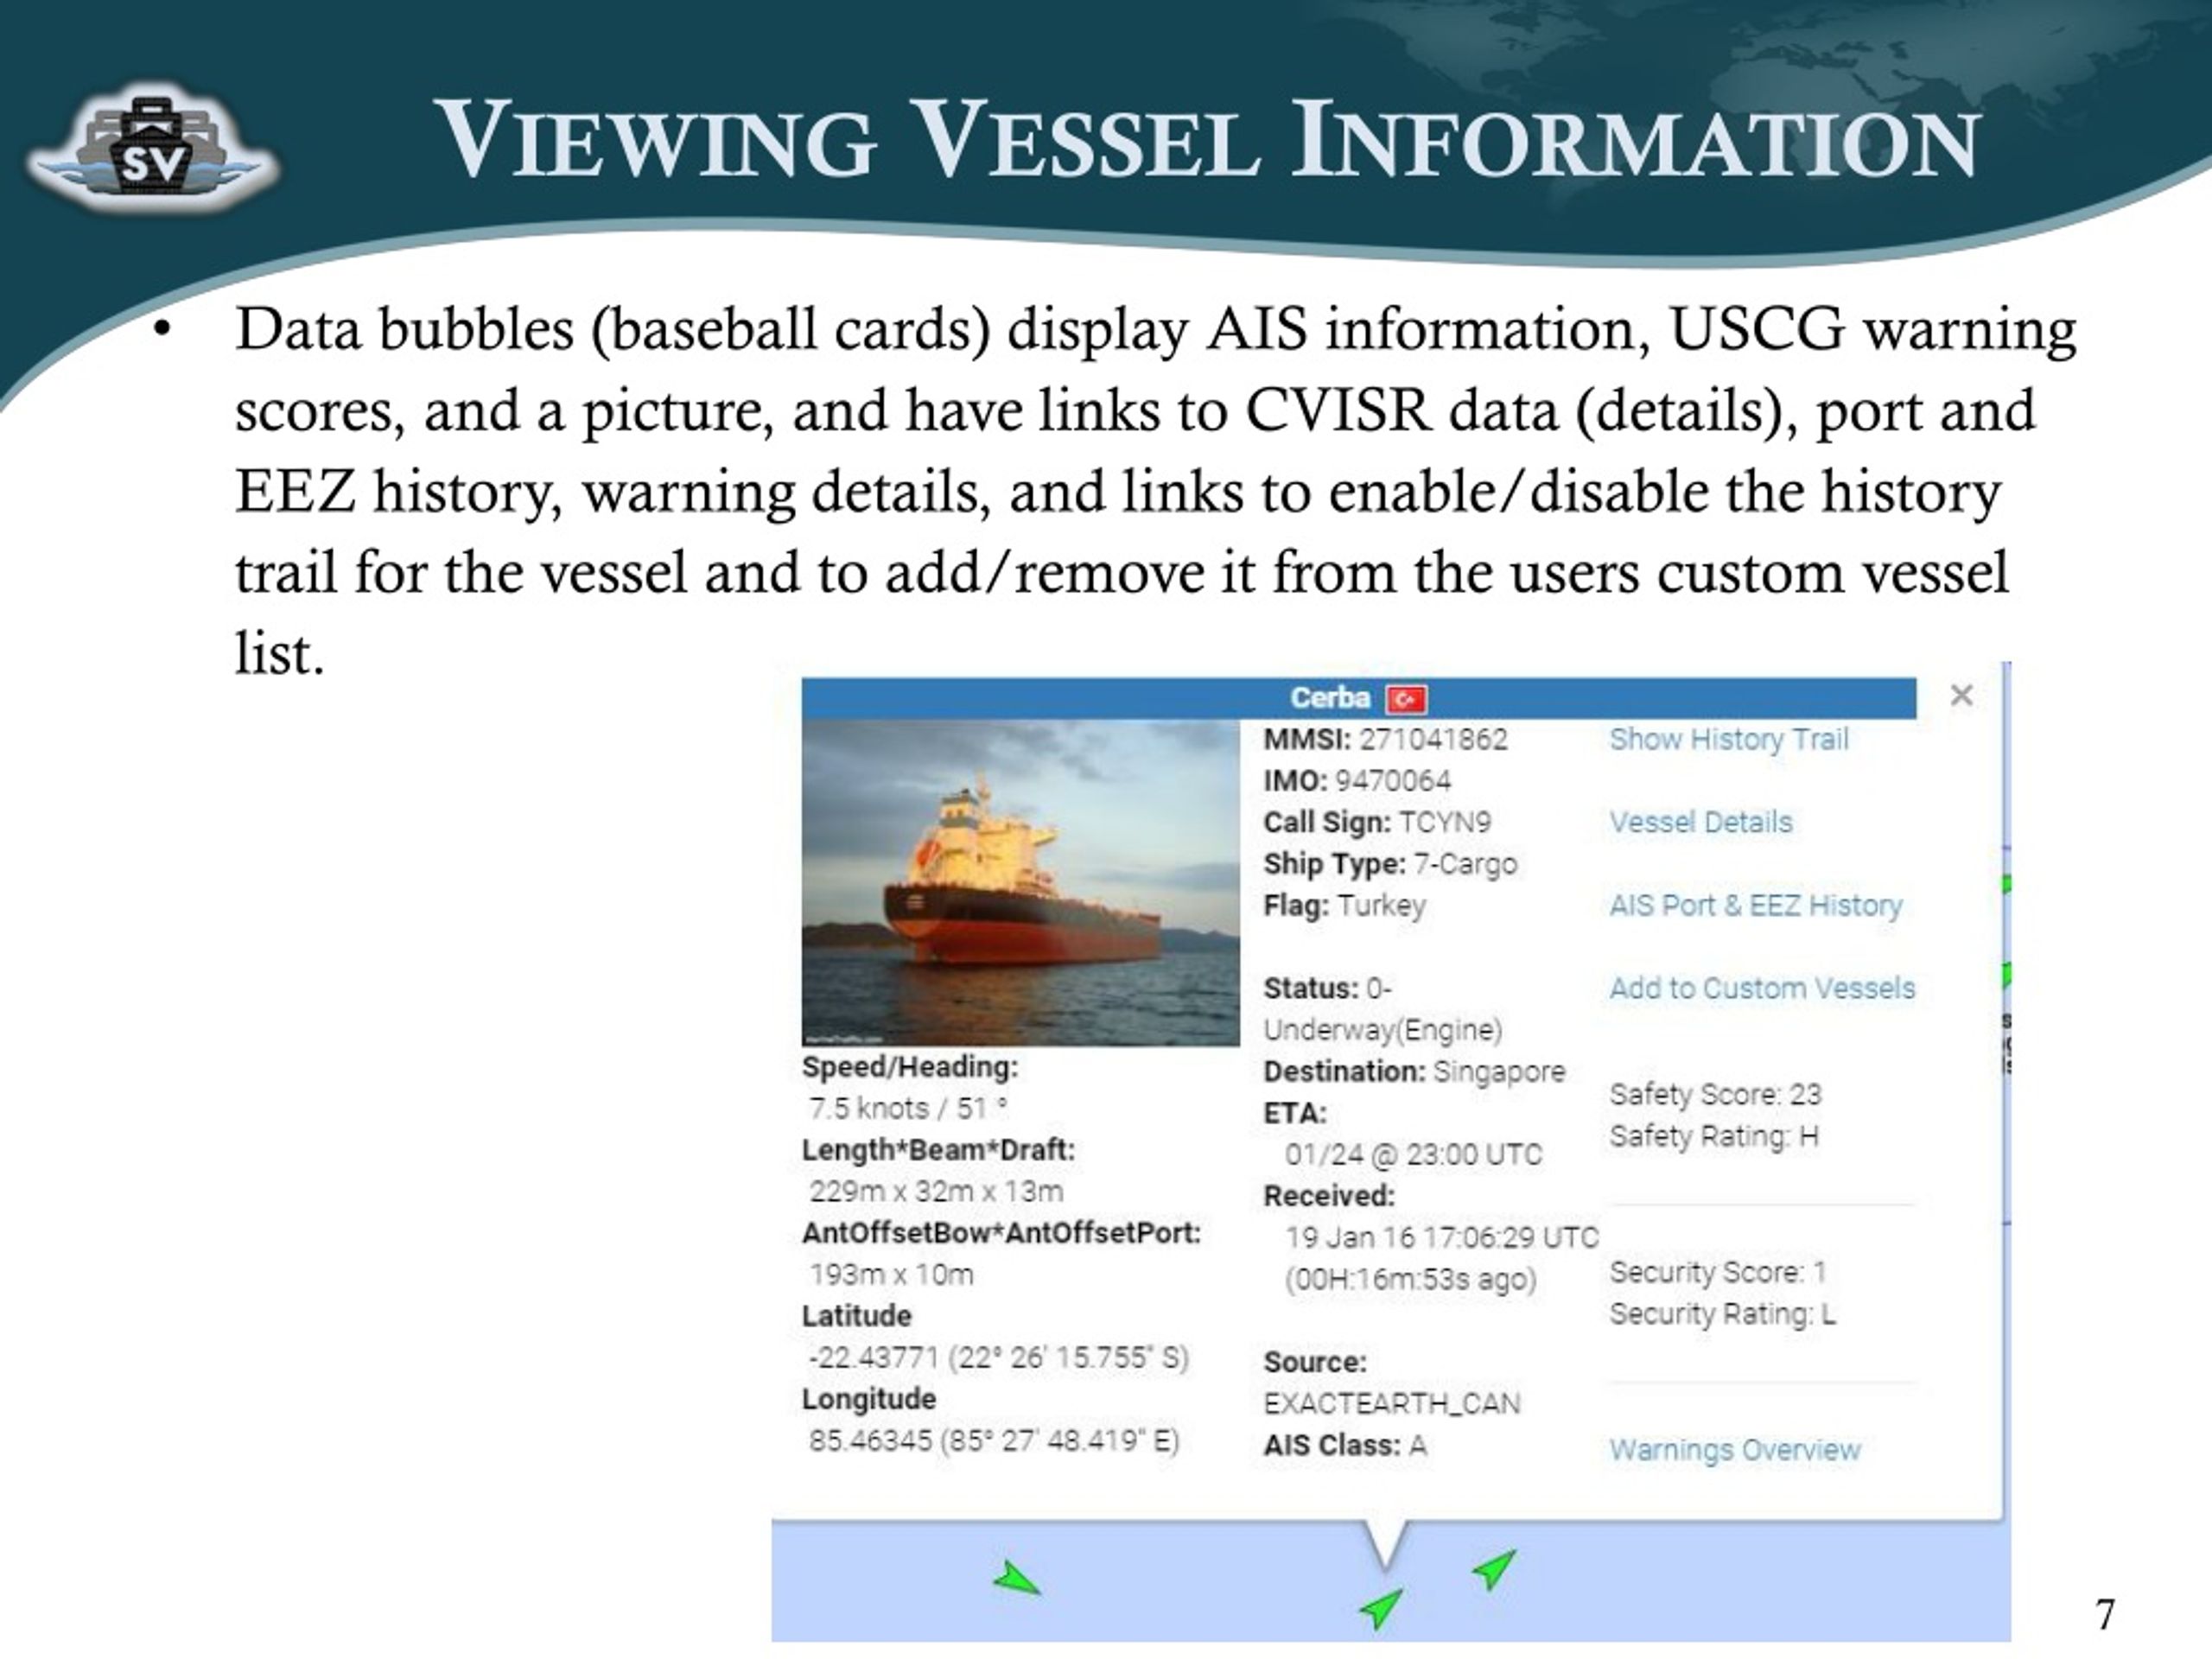 Vessel Information